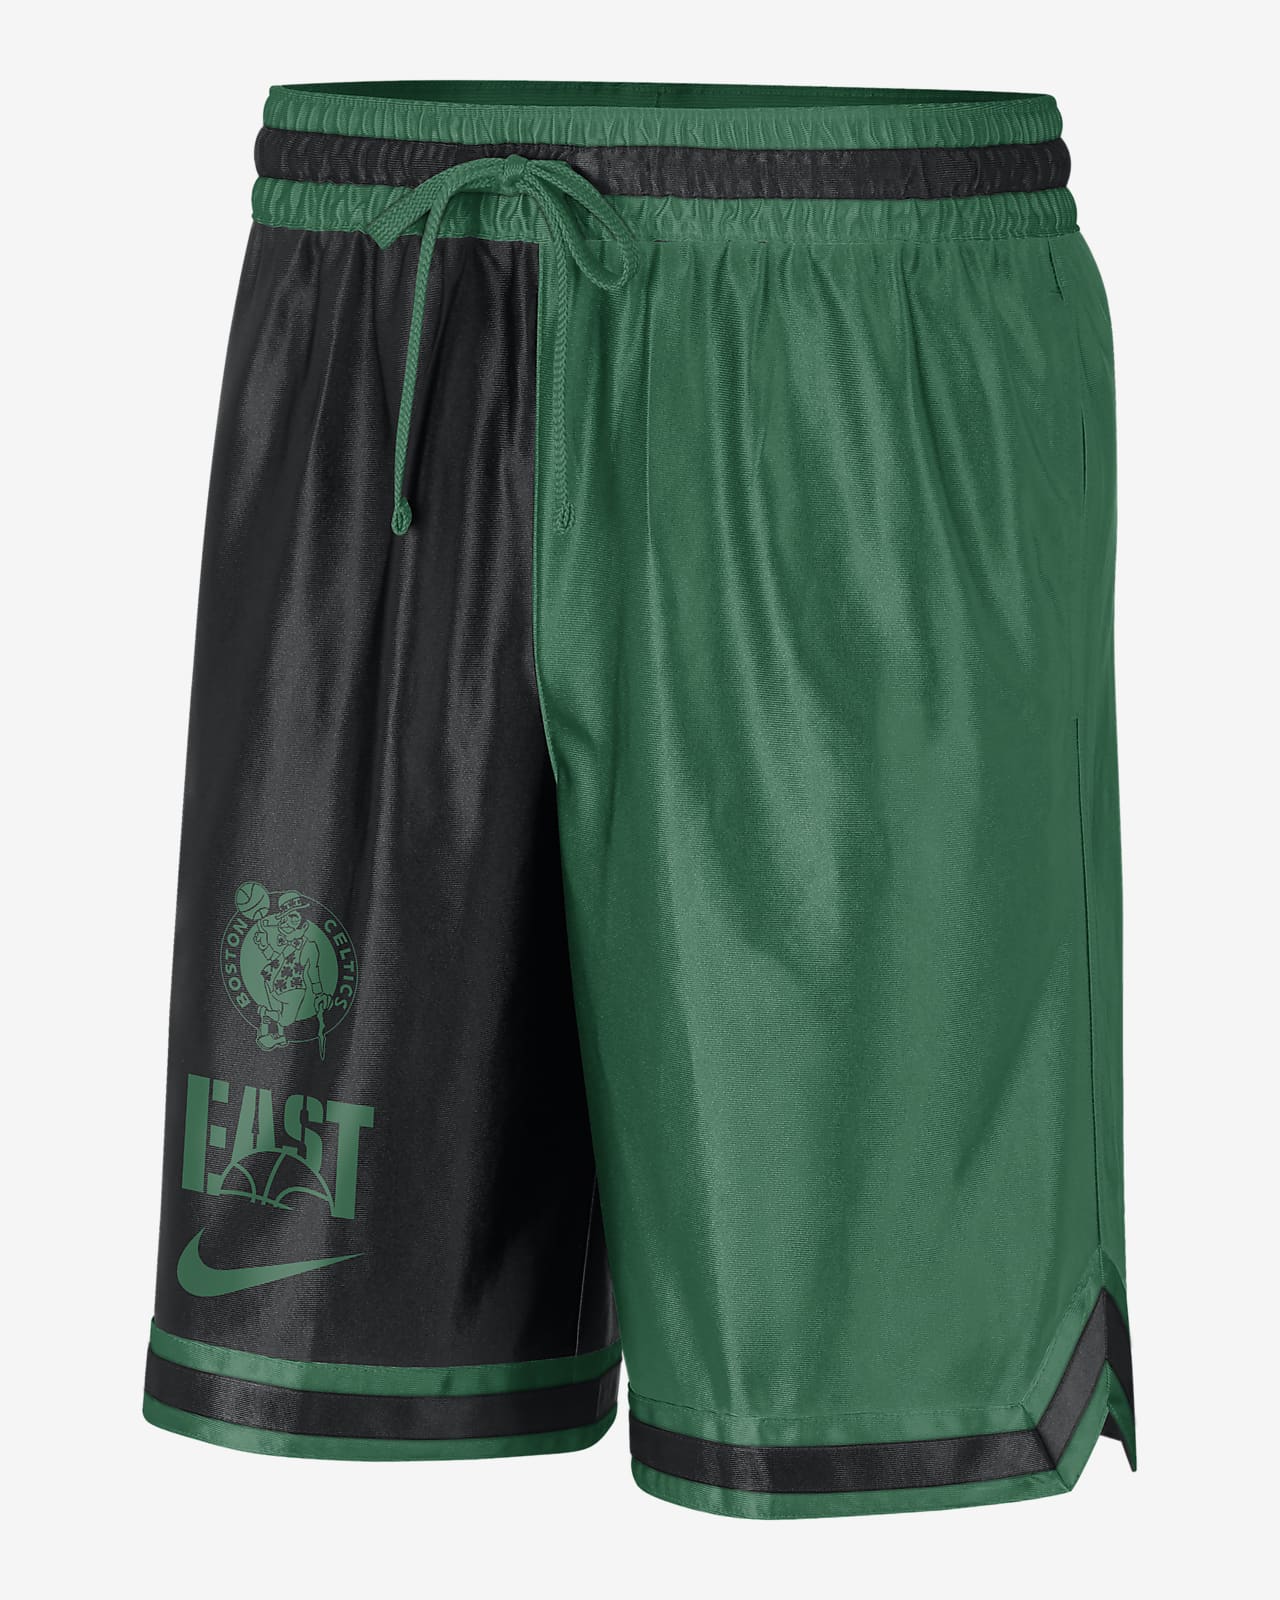 Rudyard Kipling Electrician Cut off Boston Celtics Courtside Men's Nike Dri-FIT NBA Graphic Shorts. Nike.com